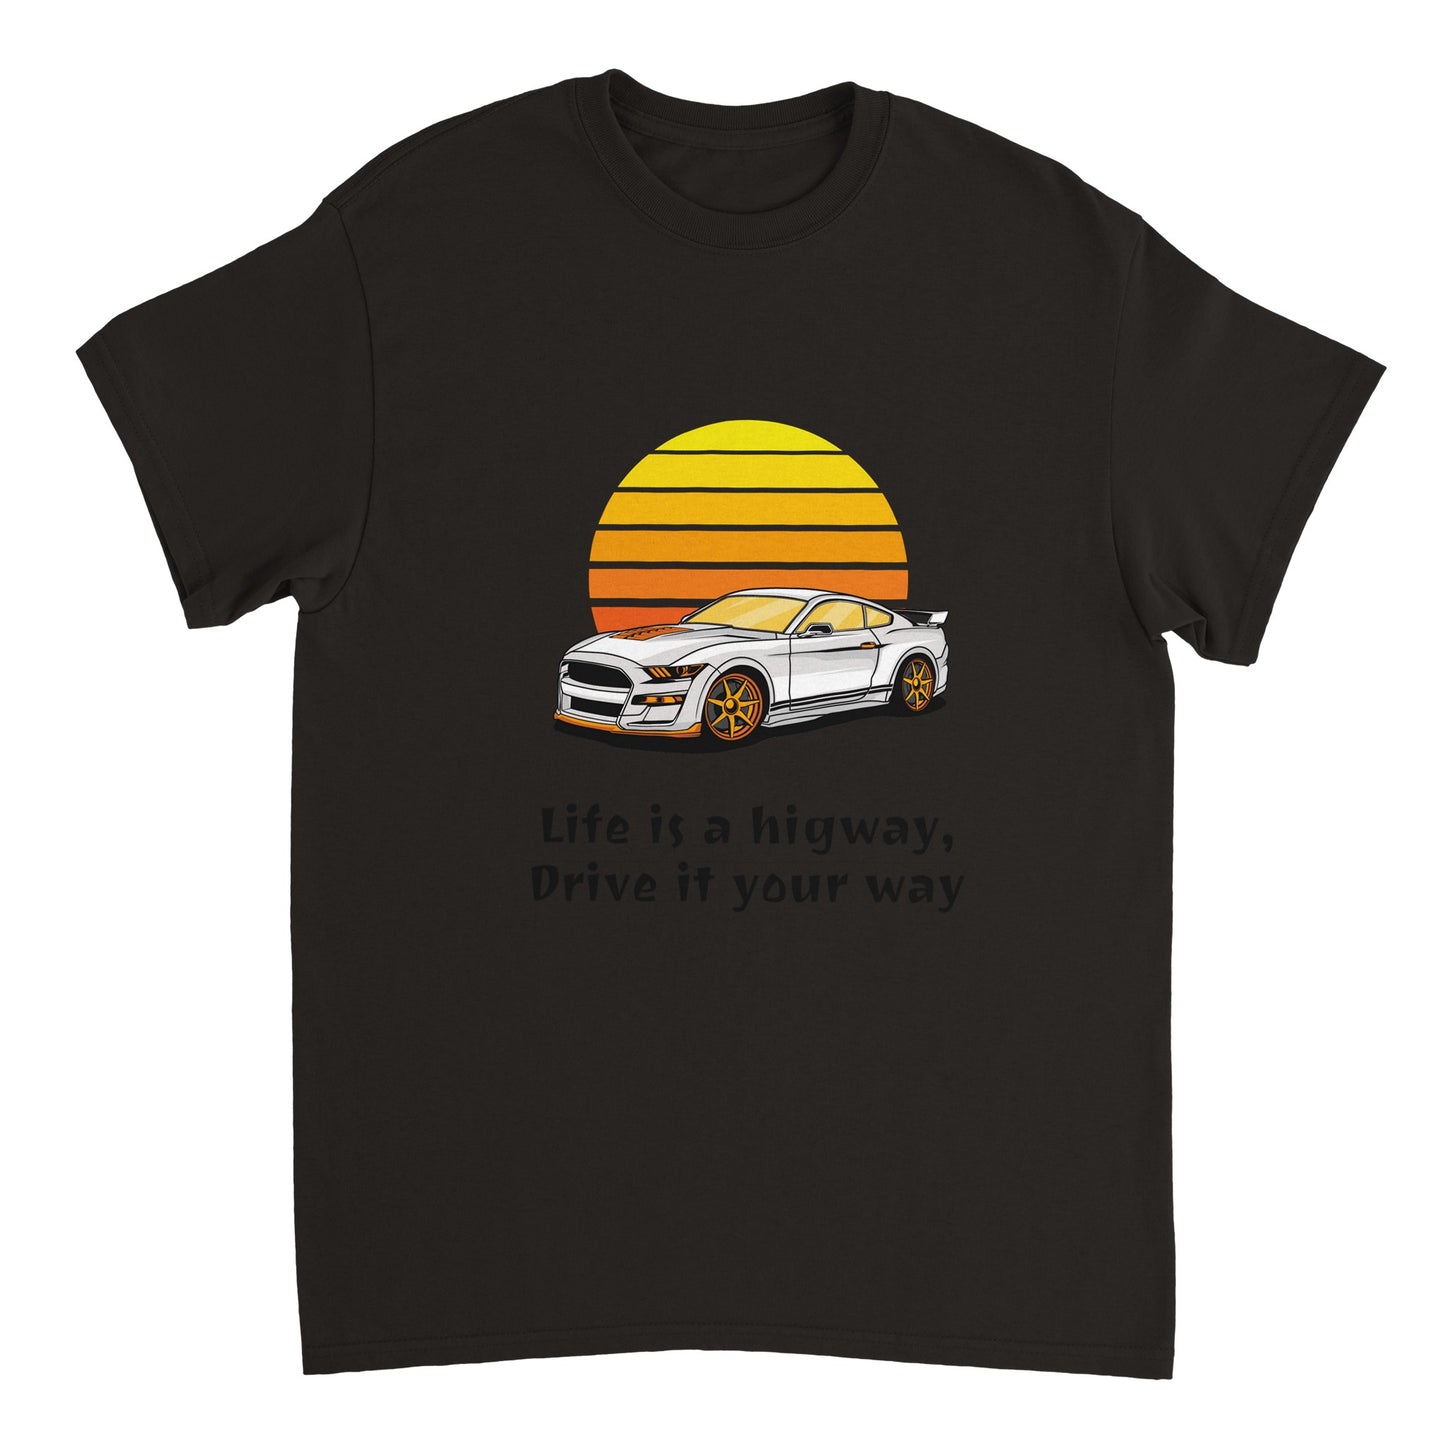 Life is a highway Heavyweight Unisex Crewneck T-shirt